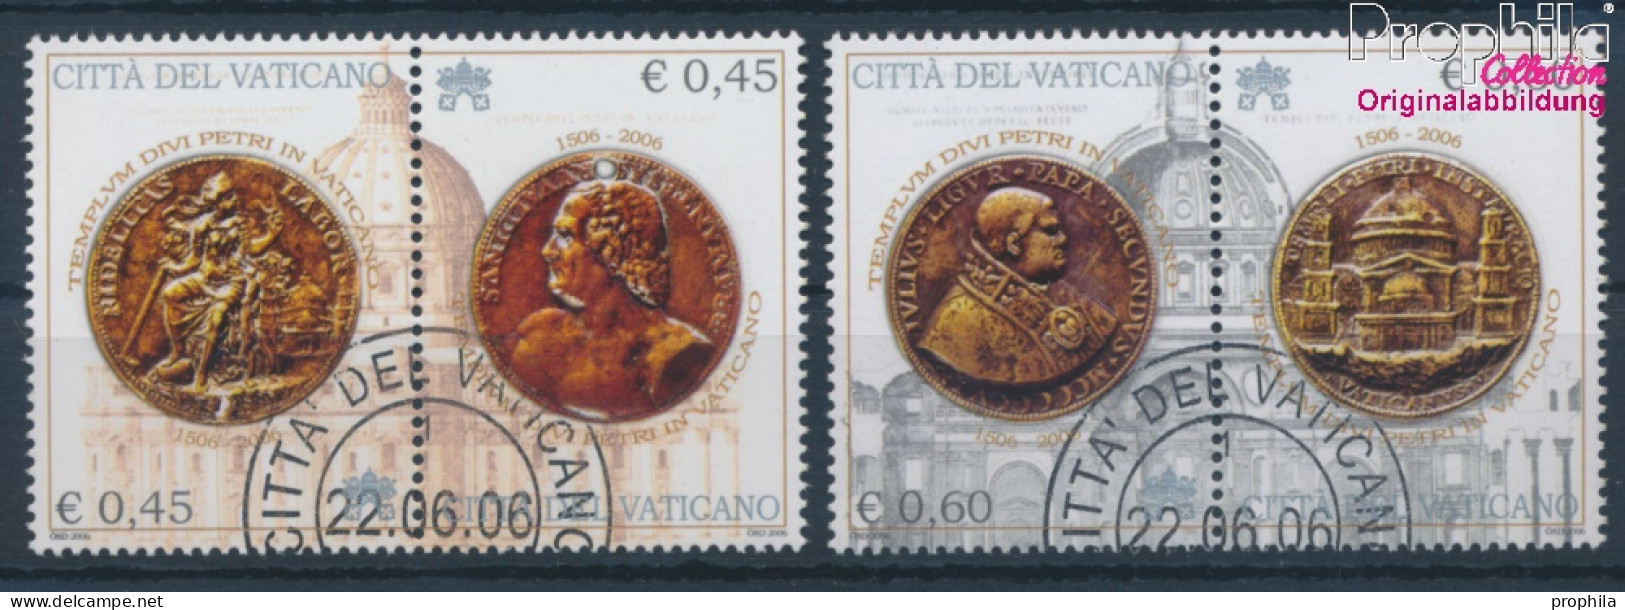 Vatikanstadt 1554-1557 Paare (kompl.Ausg.) Gestempelt 2006 Petersbasillika (10352380 - Used Stamps